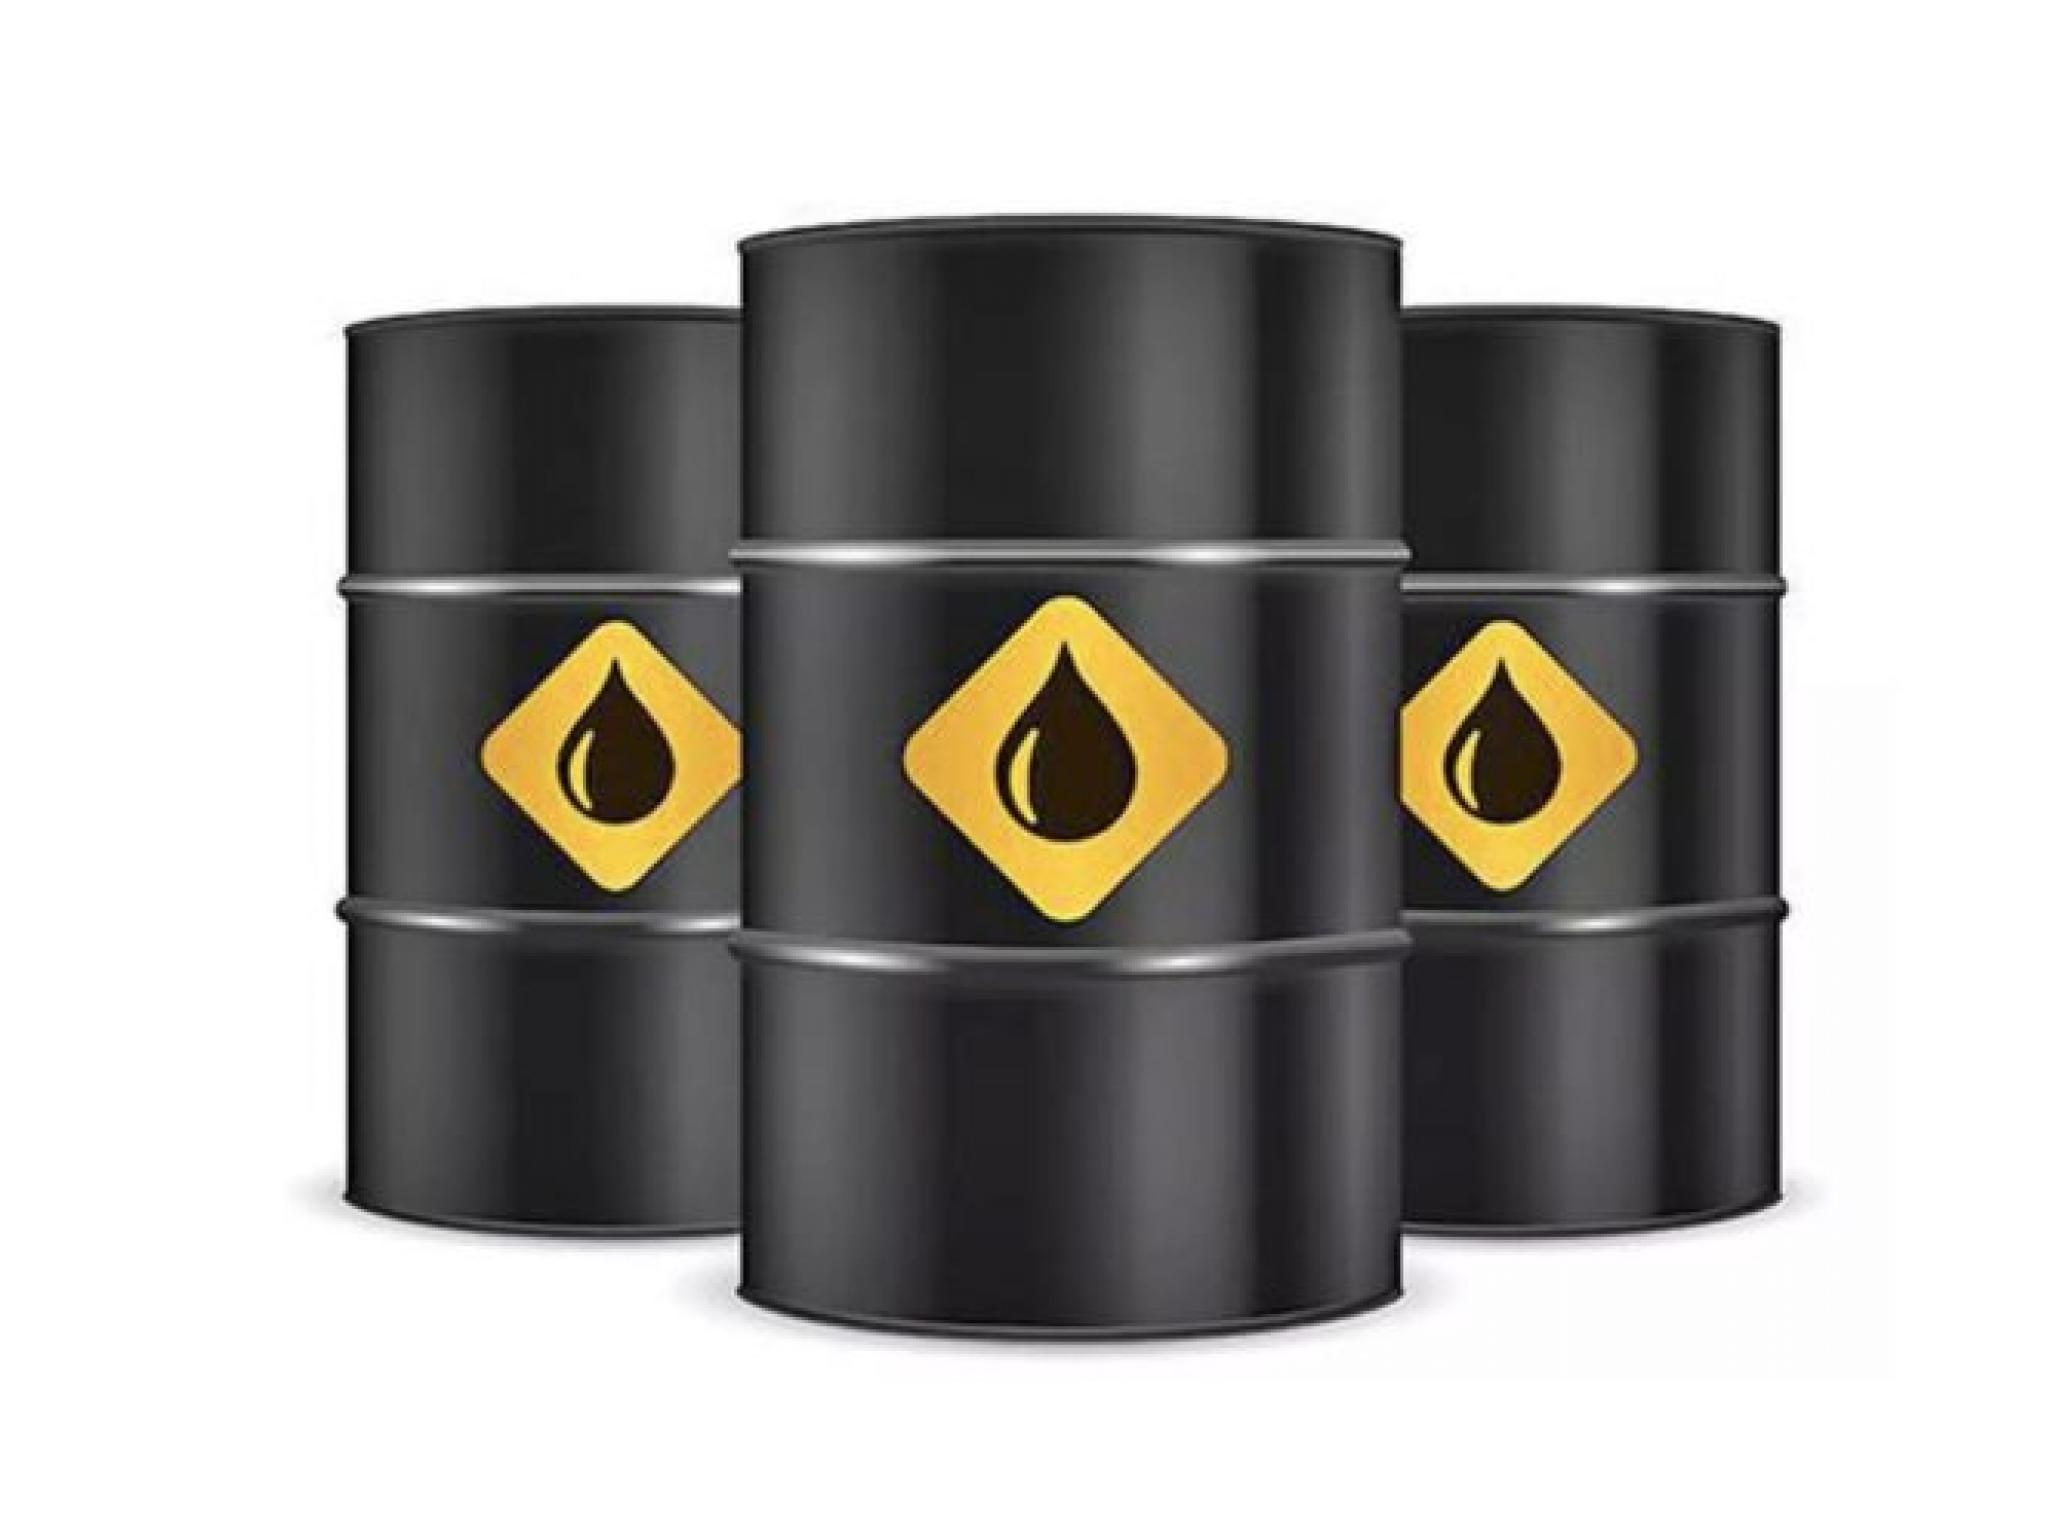  crude-oil-gains-1-gamestop-shares-plunge 